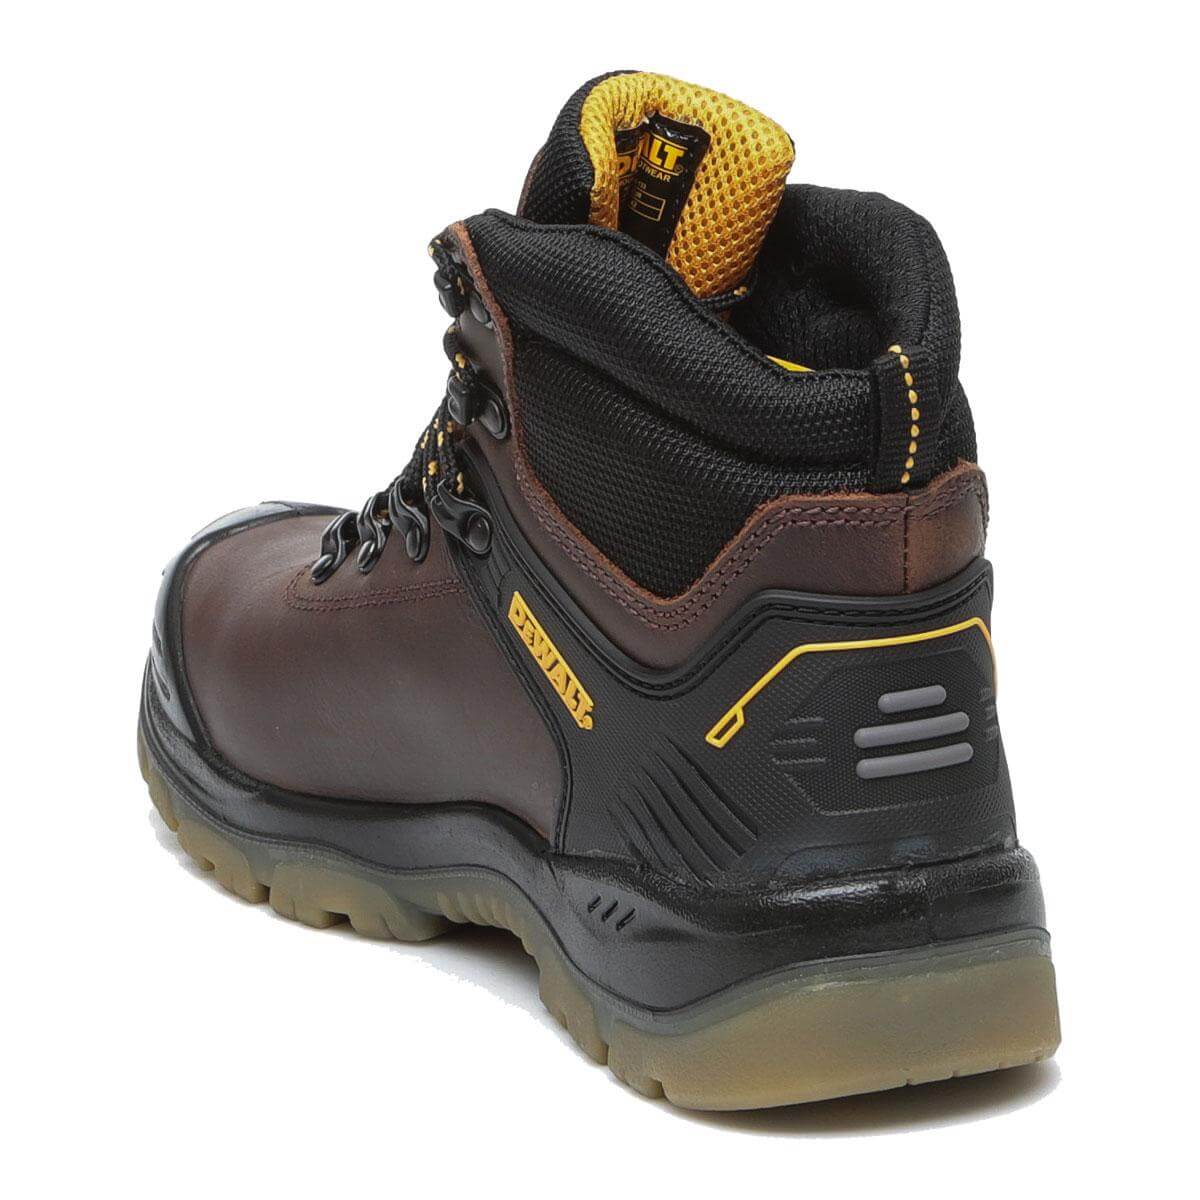 DeWalt Newark Special Offer Pack - DeWalt Newark Waterproof Safety Hiker Boots + 3 Pairs Work Socks